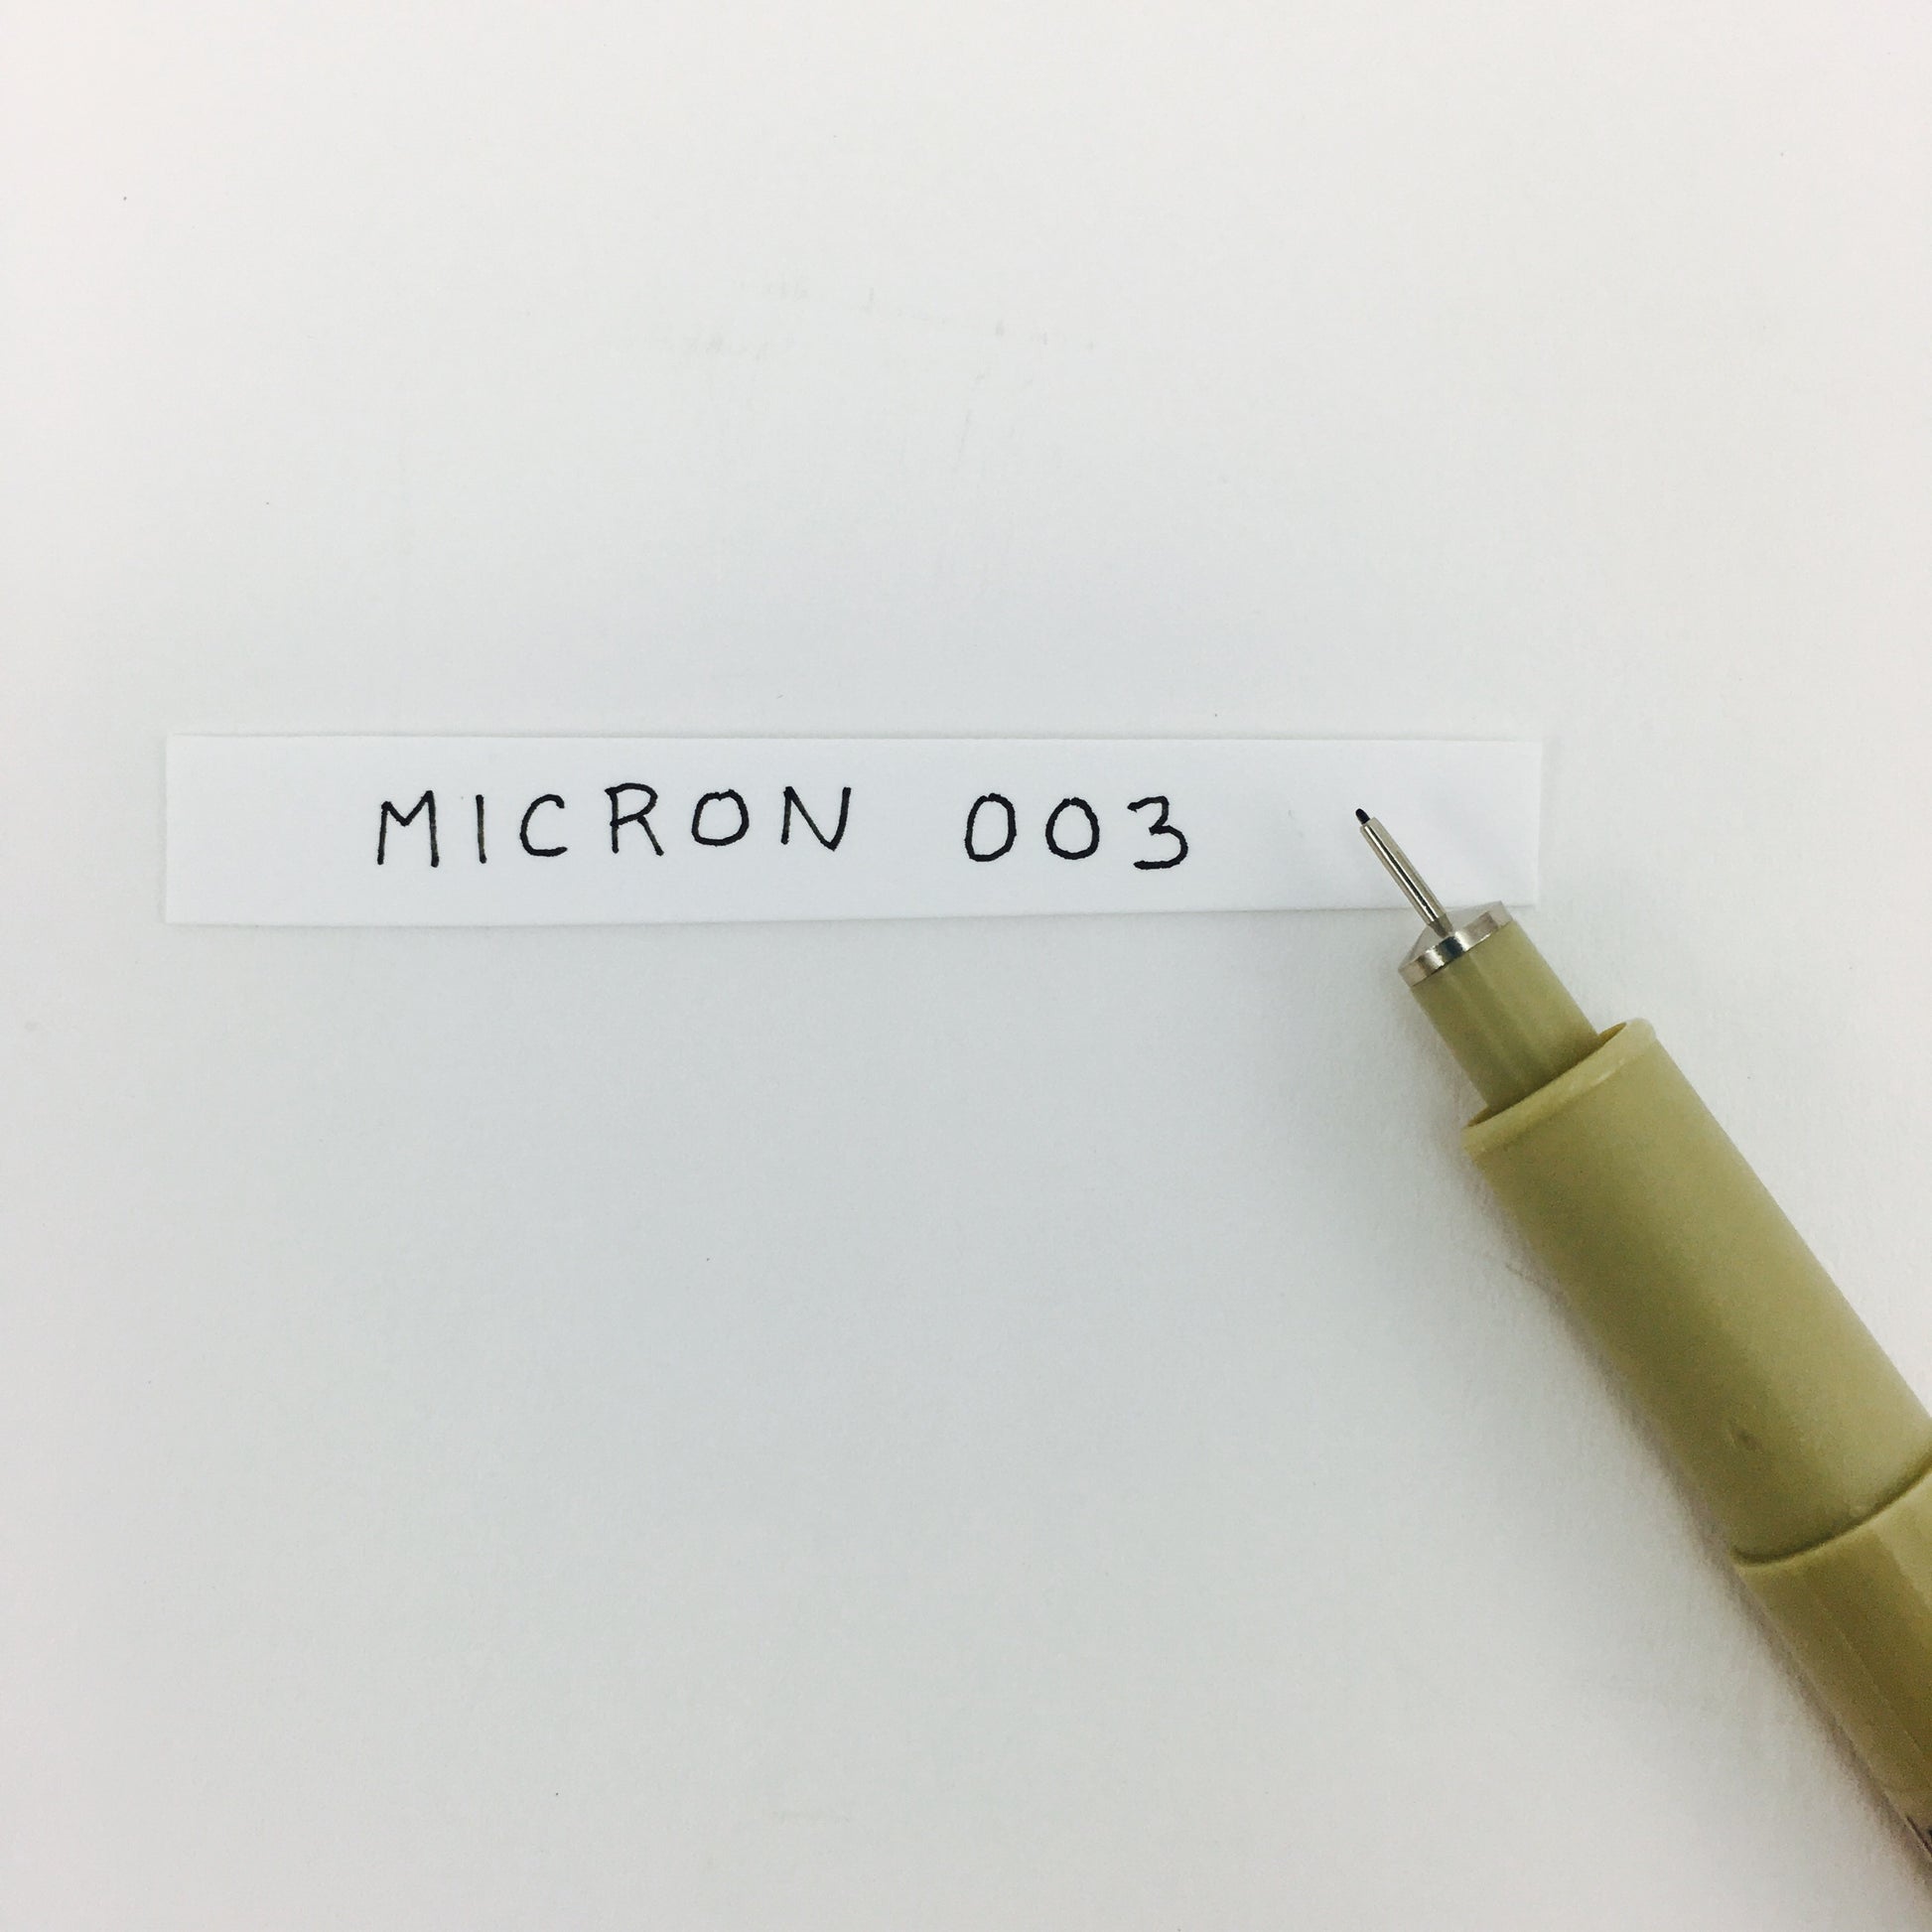 Pigma Micron Individual Pens - Black - Size 003 (0.15mm) by Sakura - K. A. Artist Shop